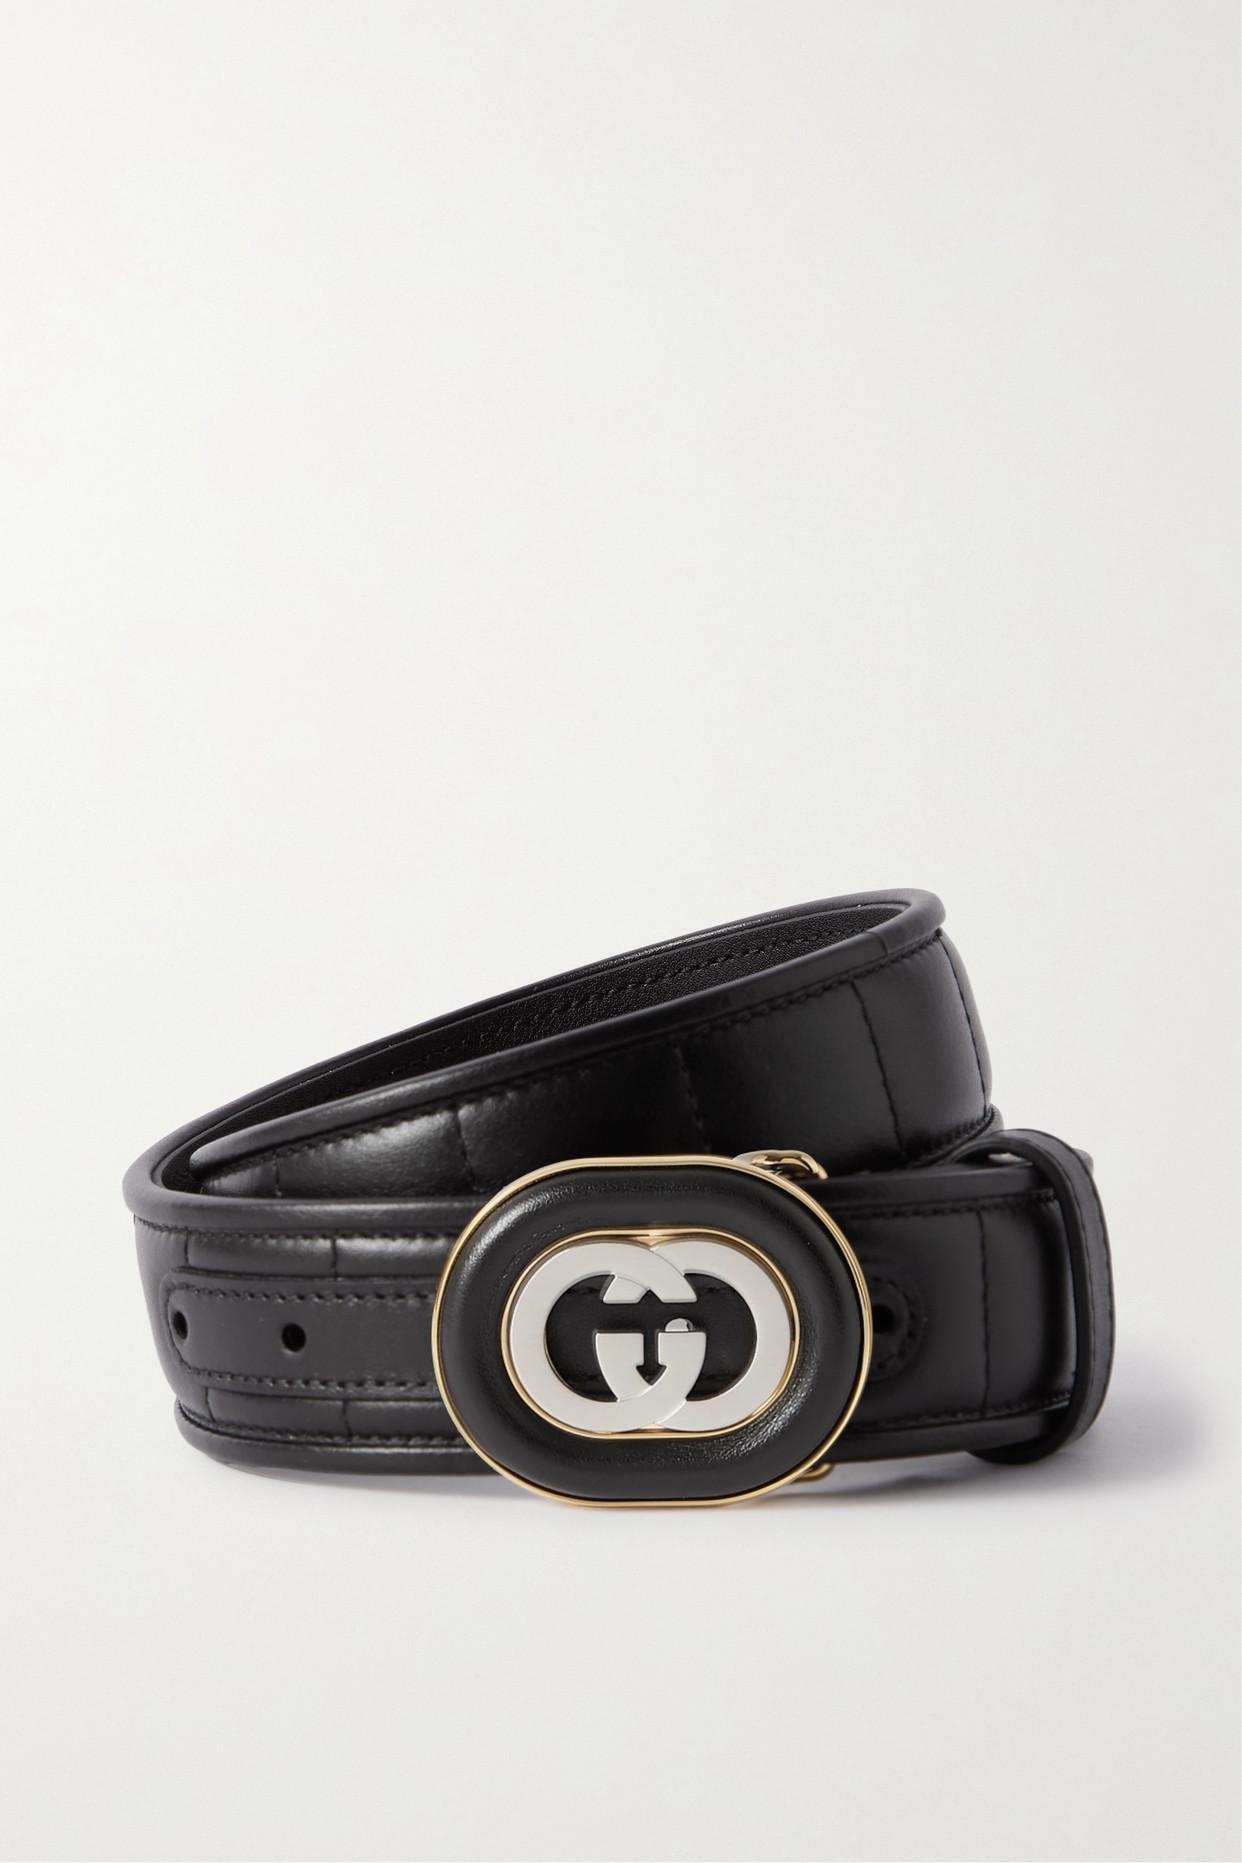 Gucci Leather Waist Belt in Black | Lyst UK